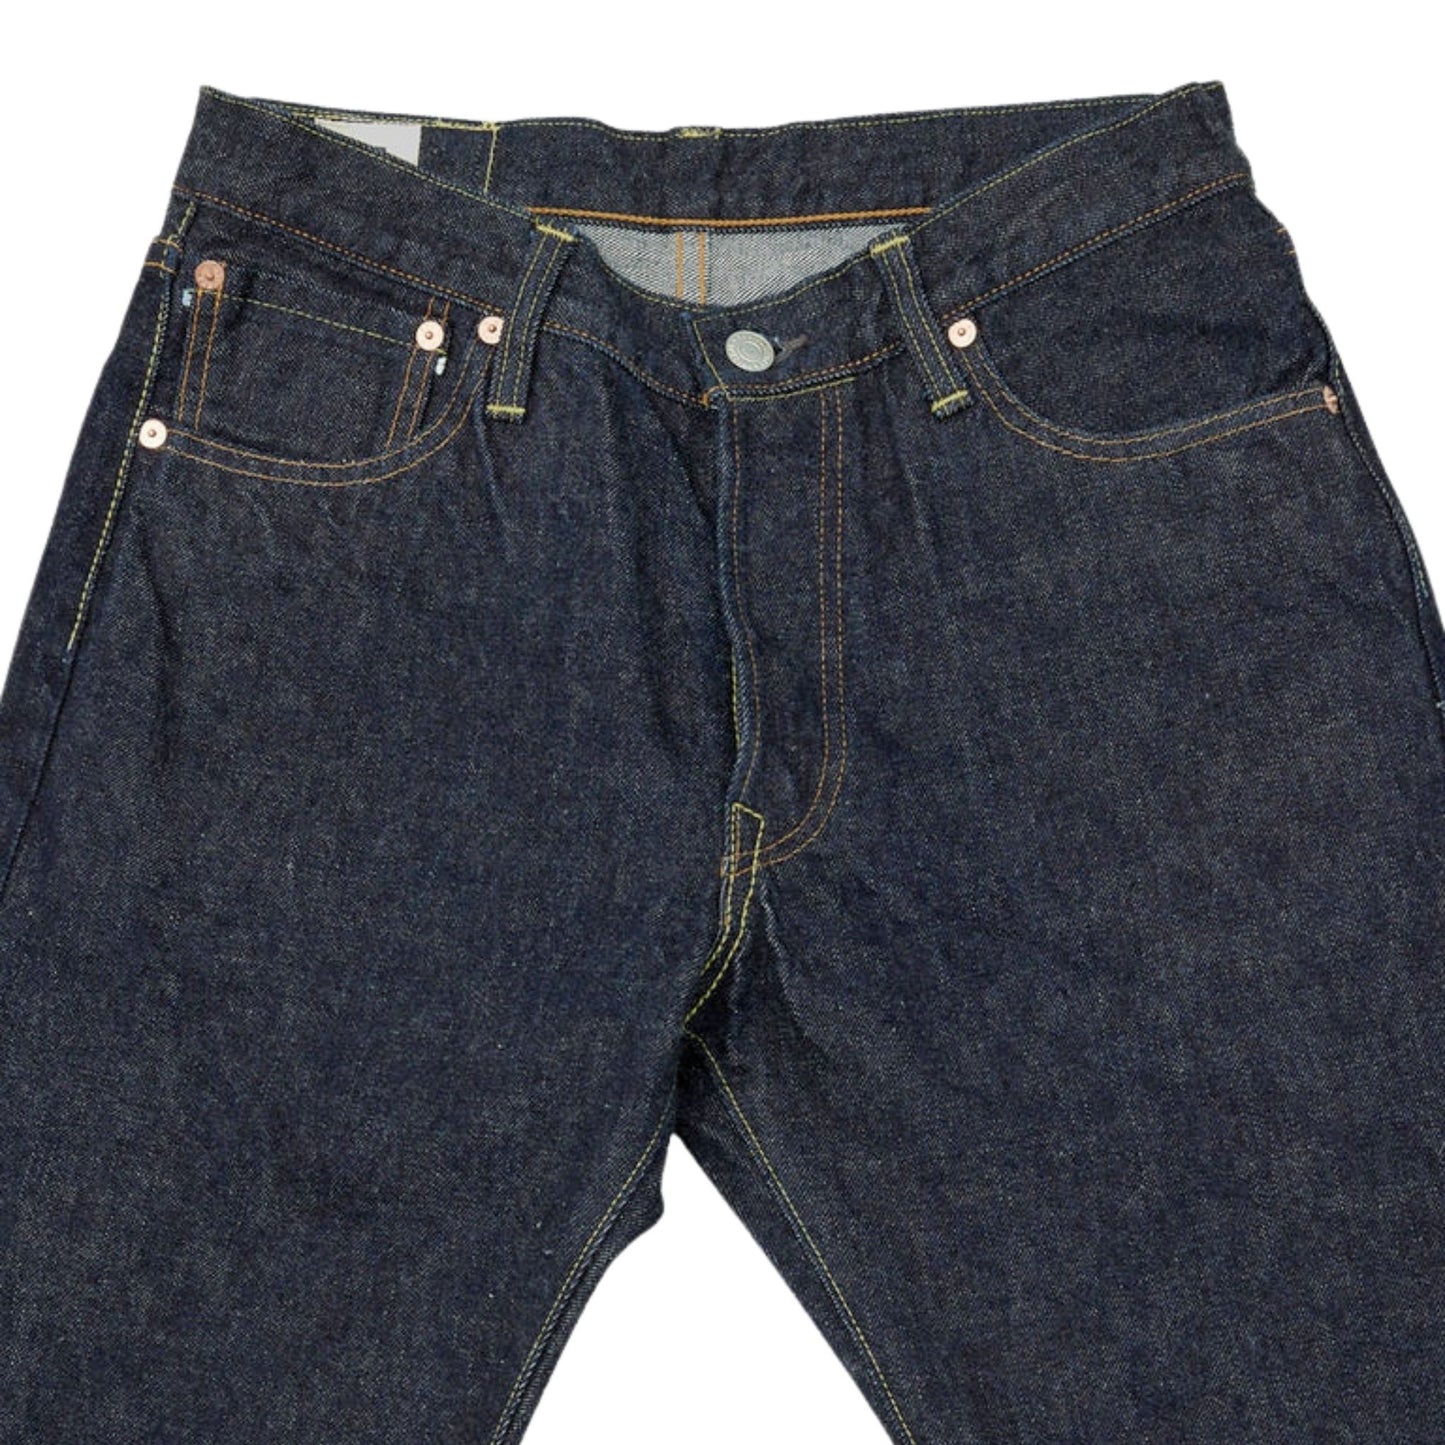 FOB FACTORY - F151-23 14.75oz Slim Straight Jeans